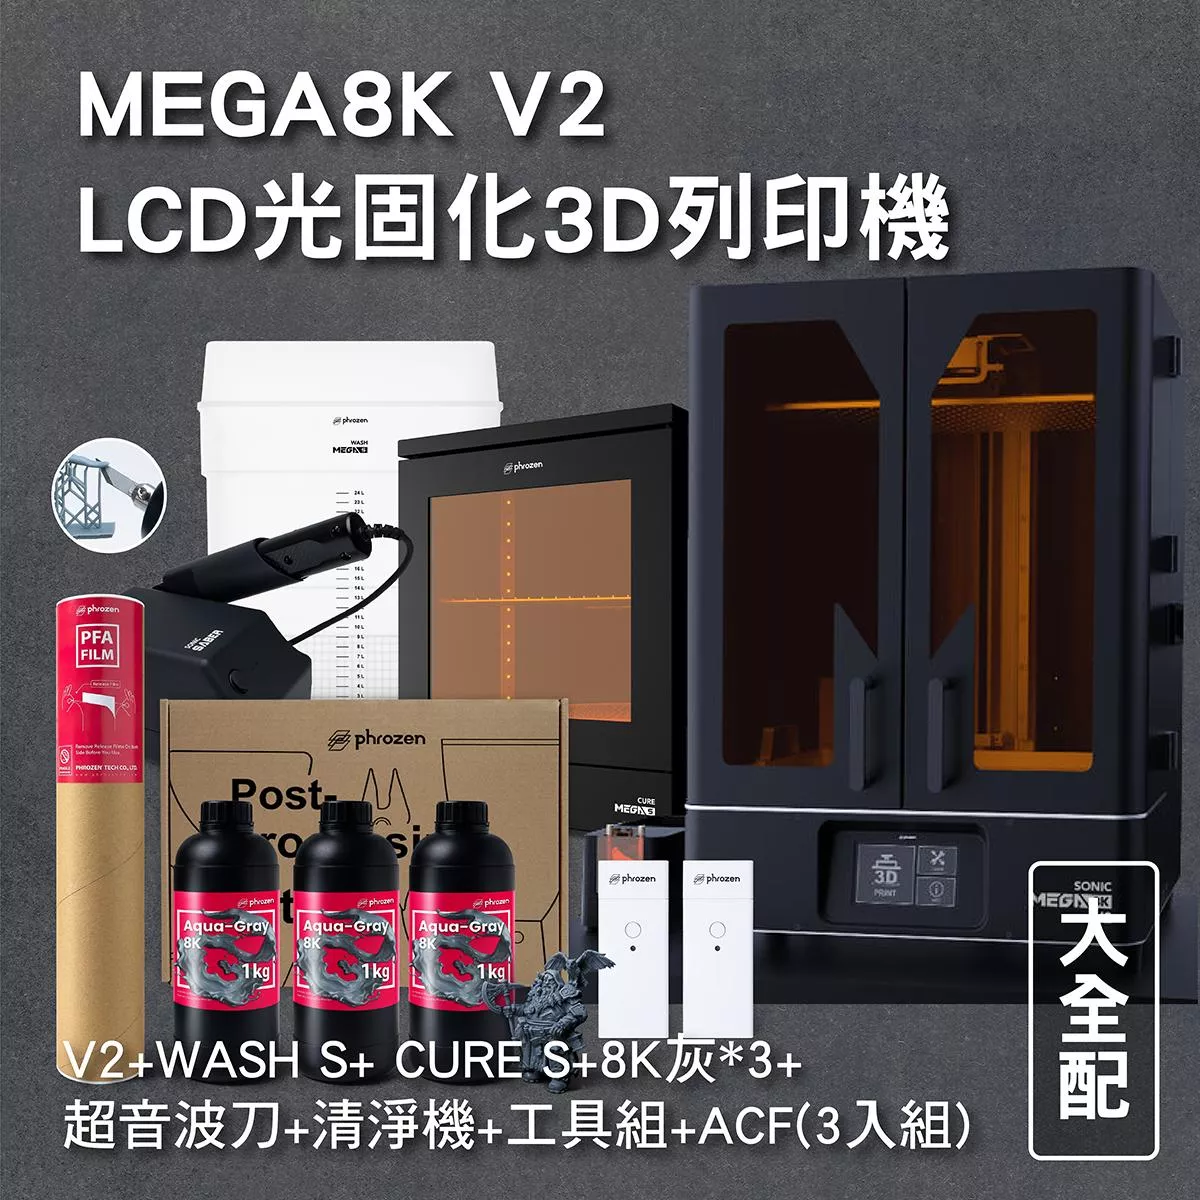 MEGA8K V2 LCD光固化3D列印機 大全配 (V2+WASH S+ CURE S+8K灰*3+超音波刀+清淨機+工具組+ACF(3入組) )